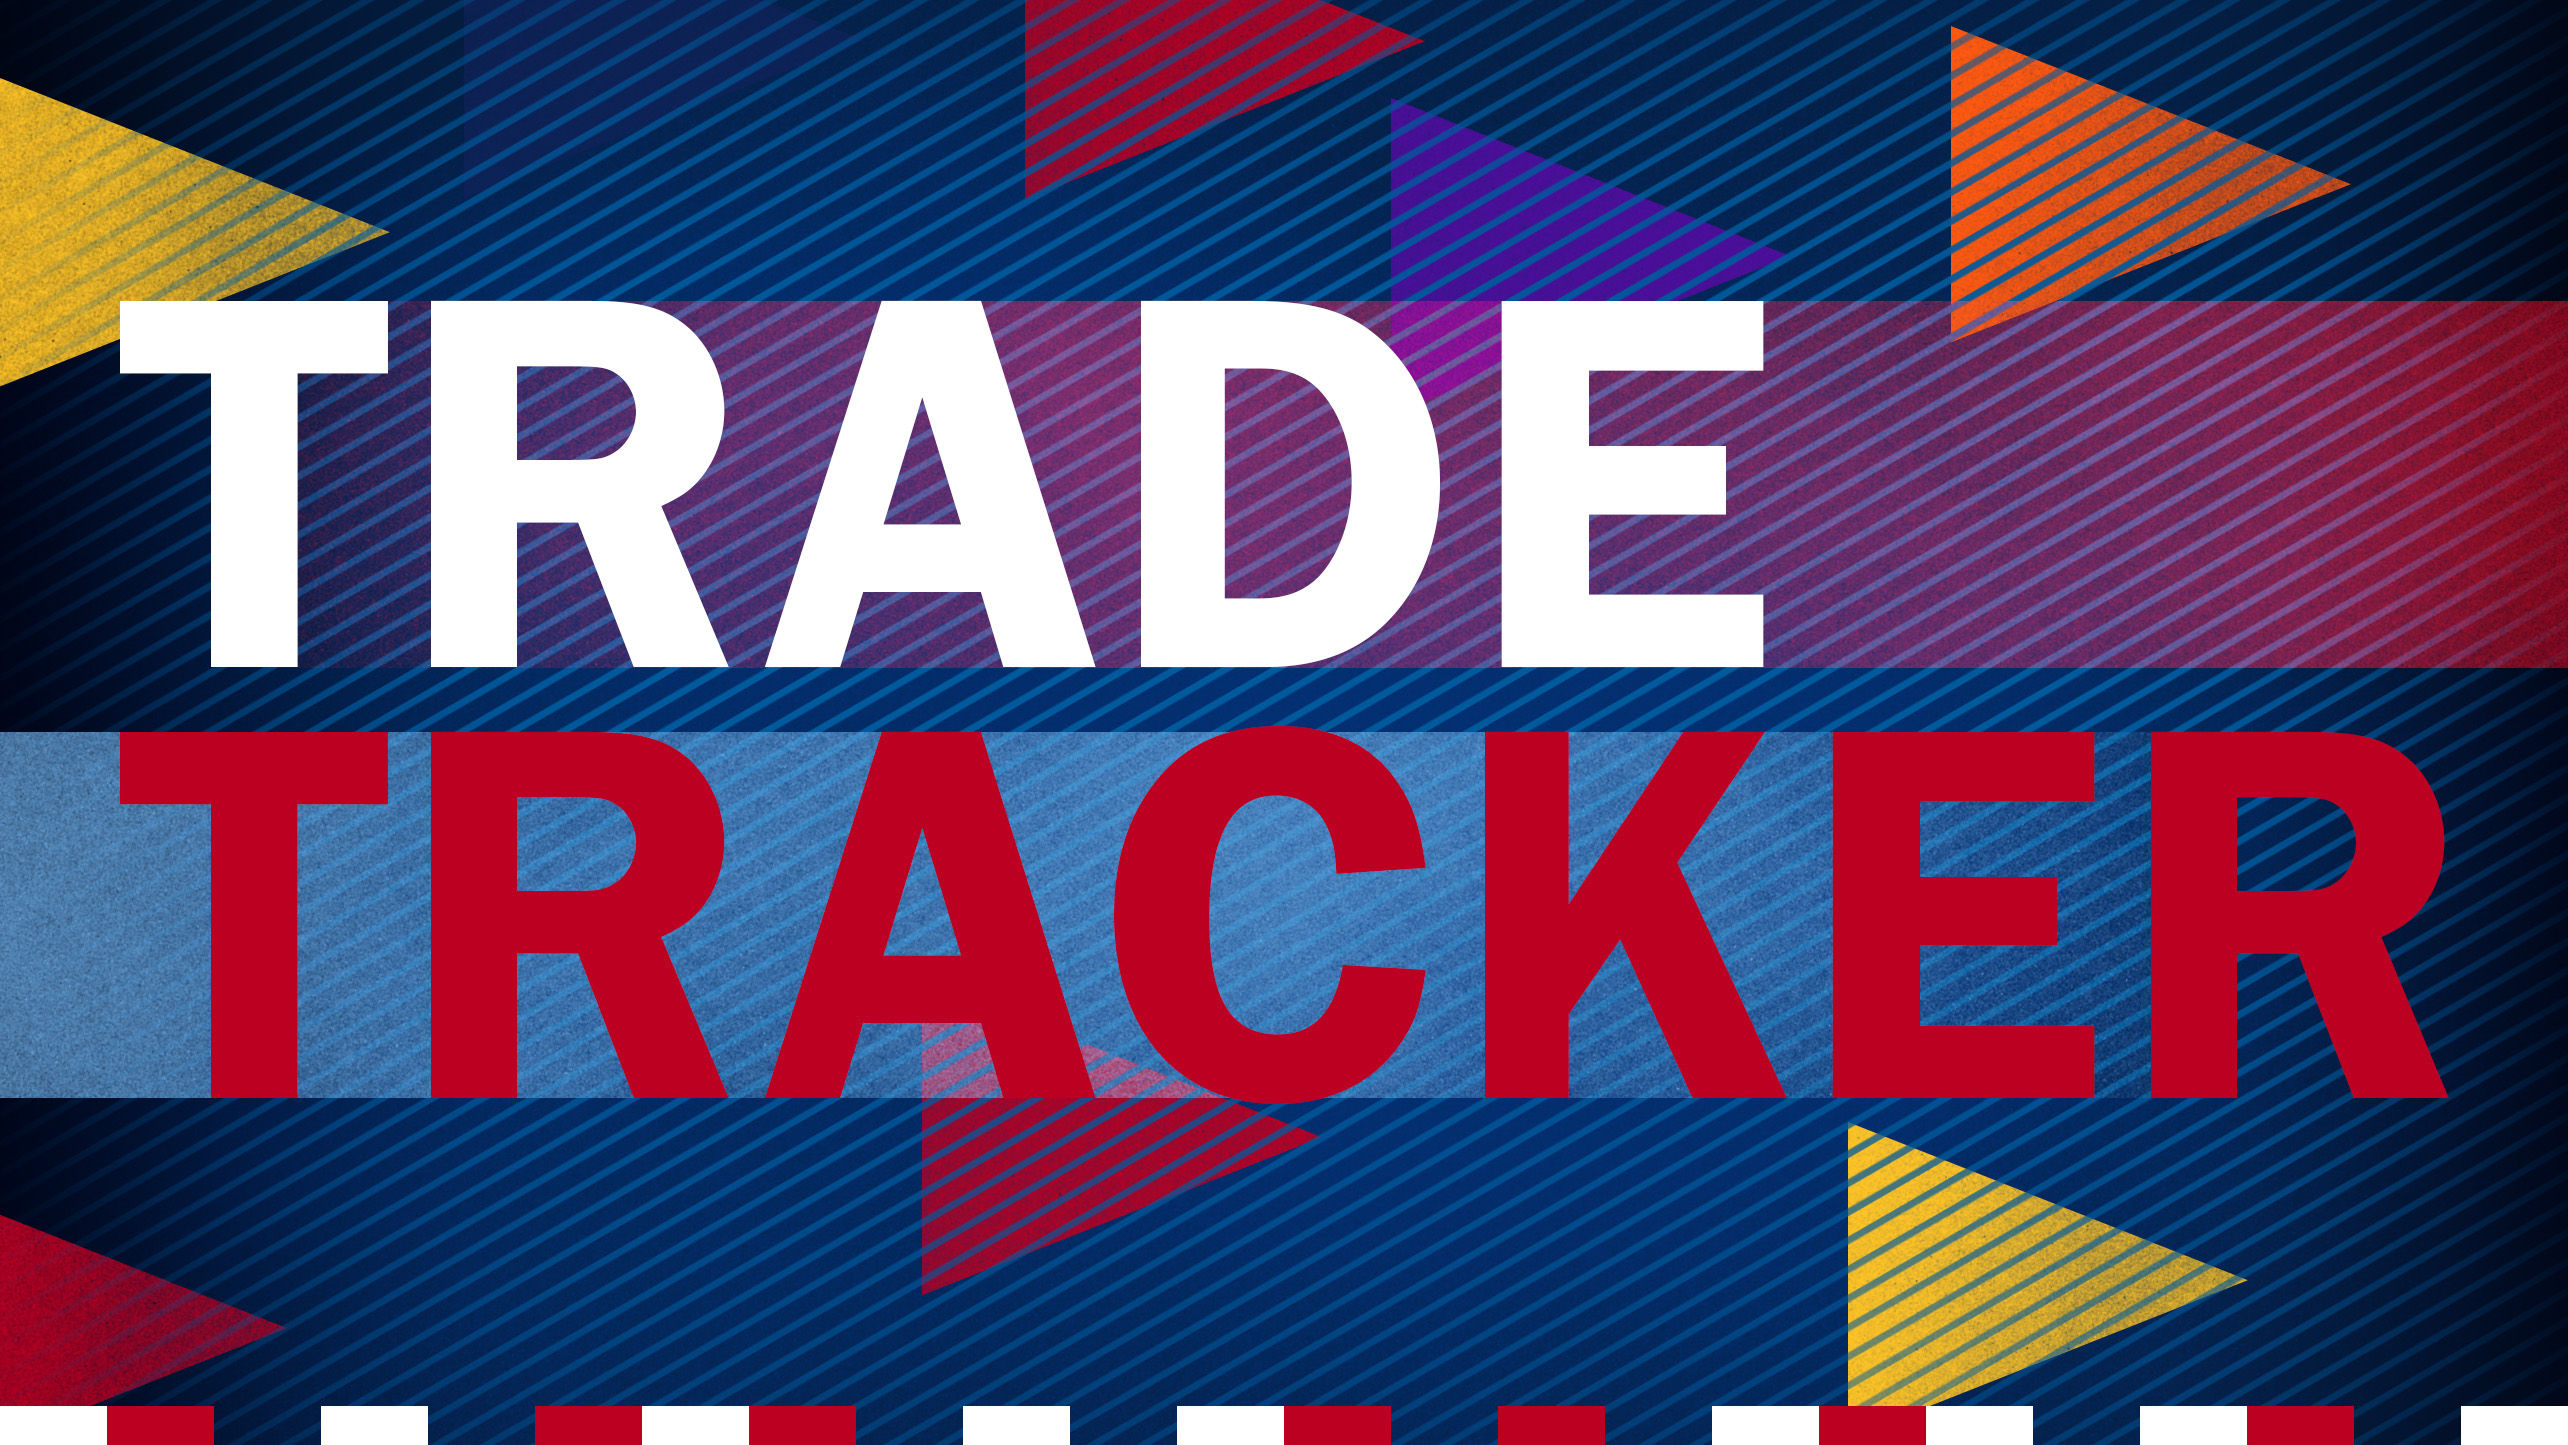 Trade Tracker